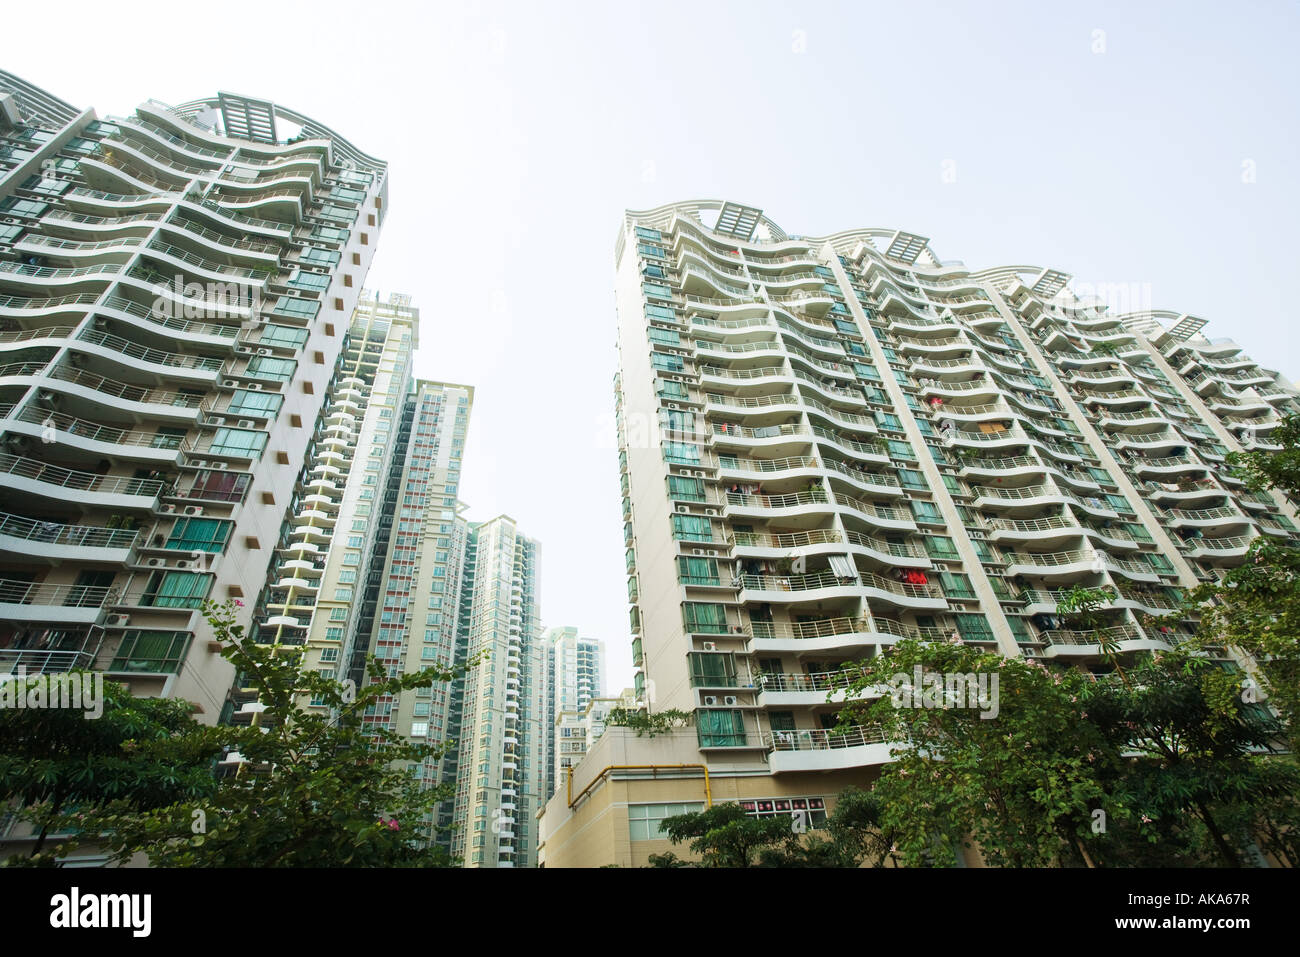 China, Guangdong Province, Guangzhou, high rise apartment buildings Stock Photo